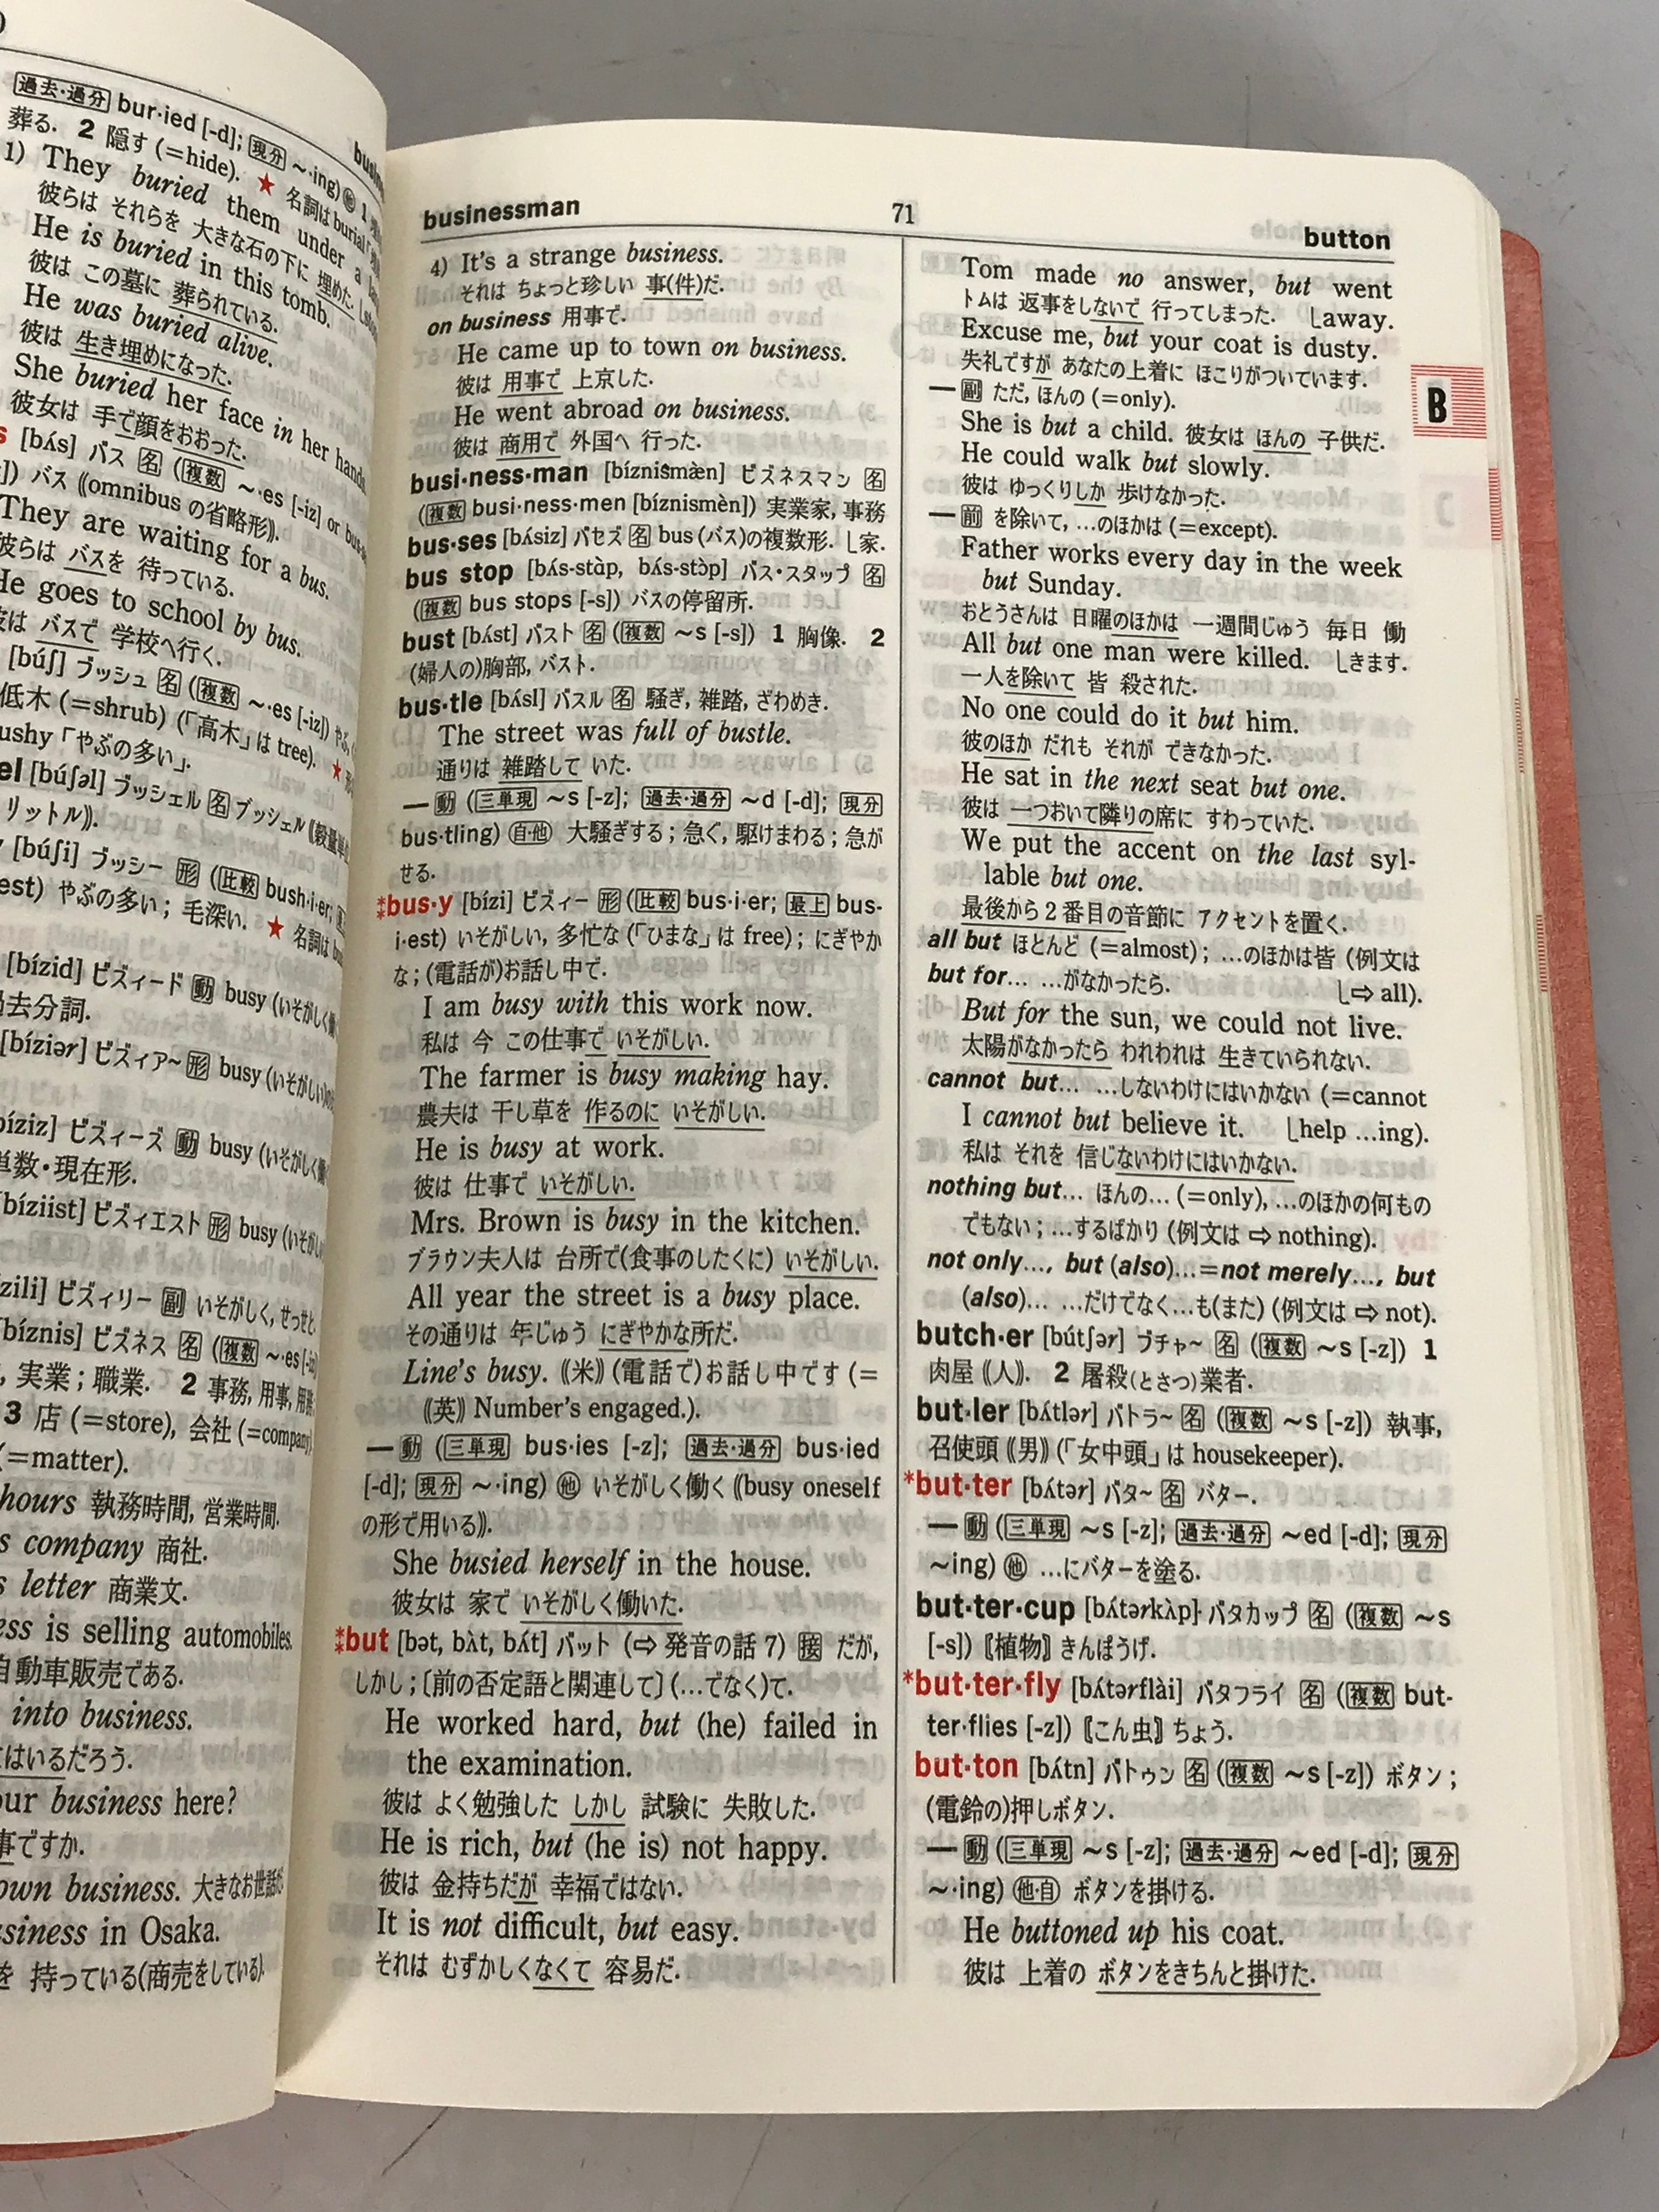 Kenkyusha's Apollo English-Japanese Dictionary 1969